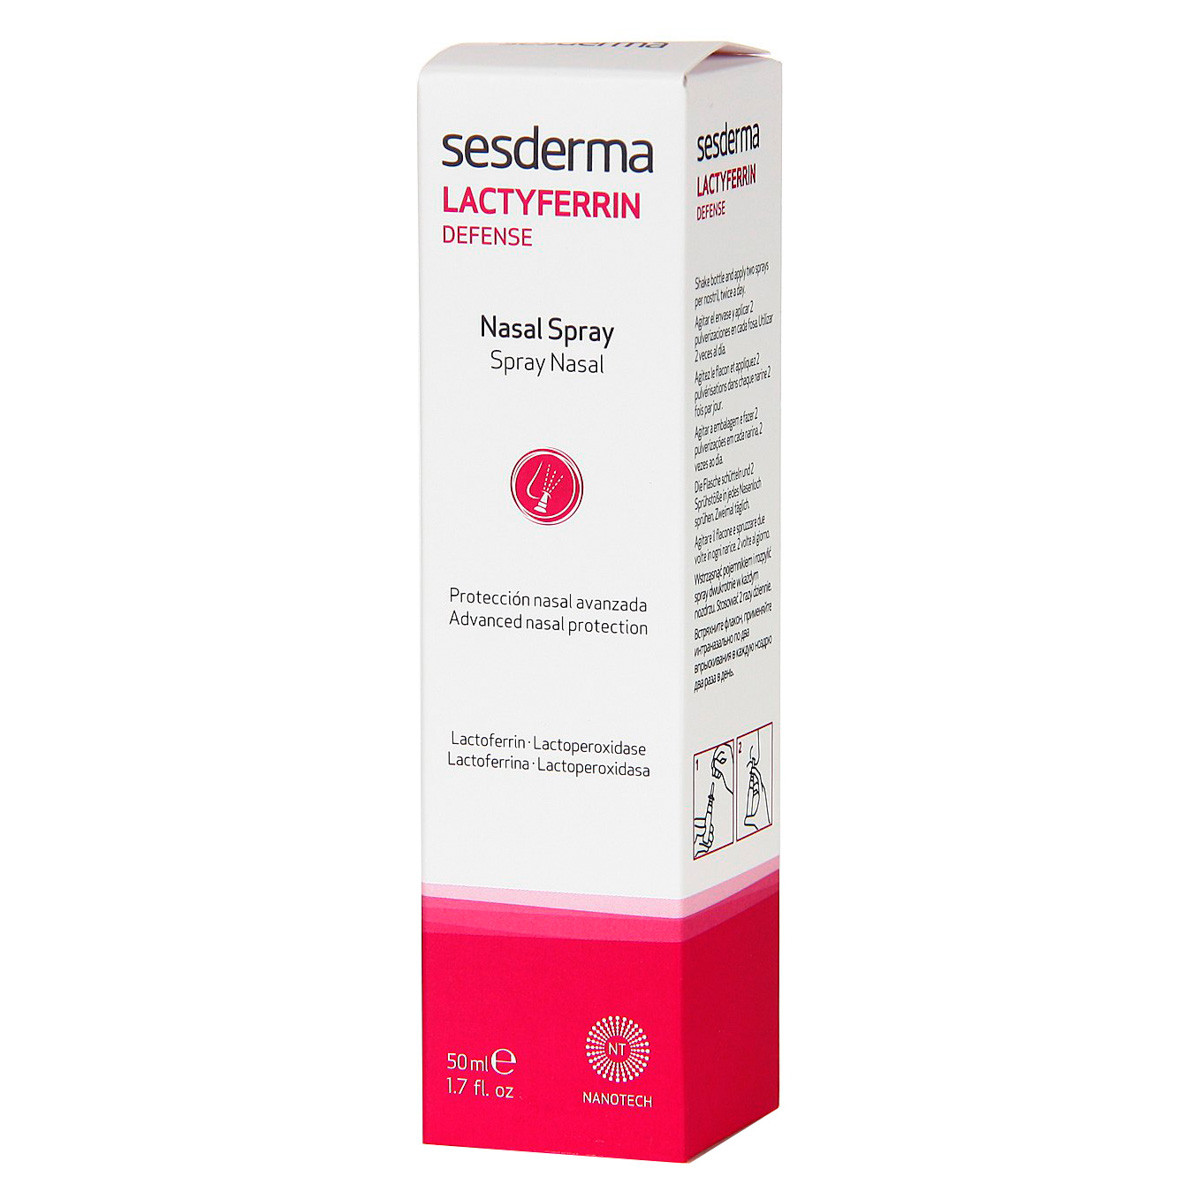 Imagen de Sesderma lactyferrin defense nasal spray 300 ml